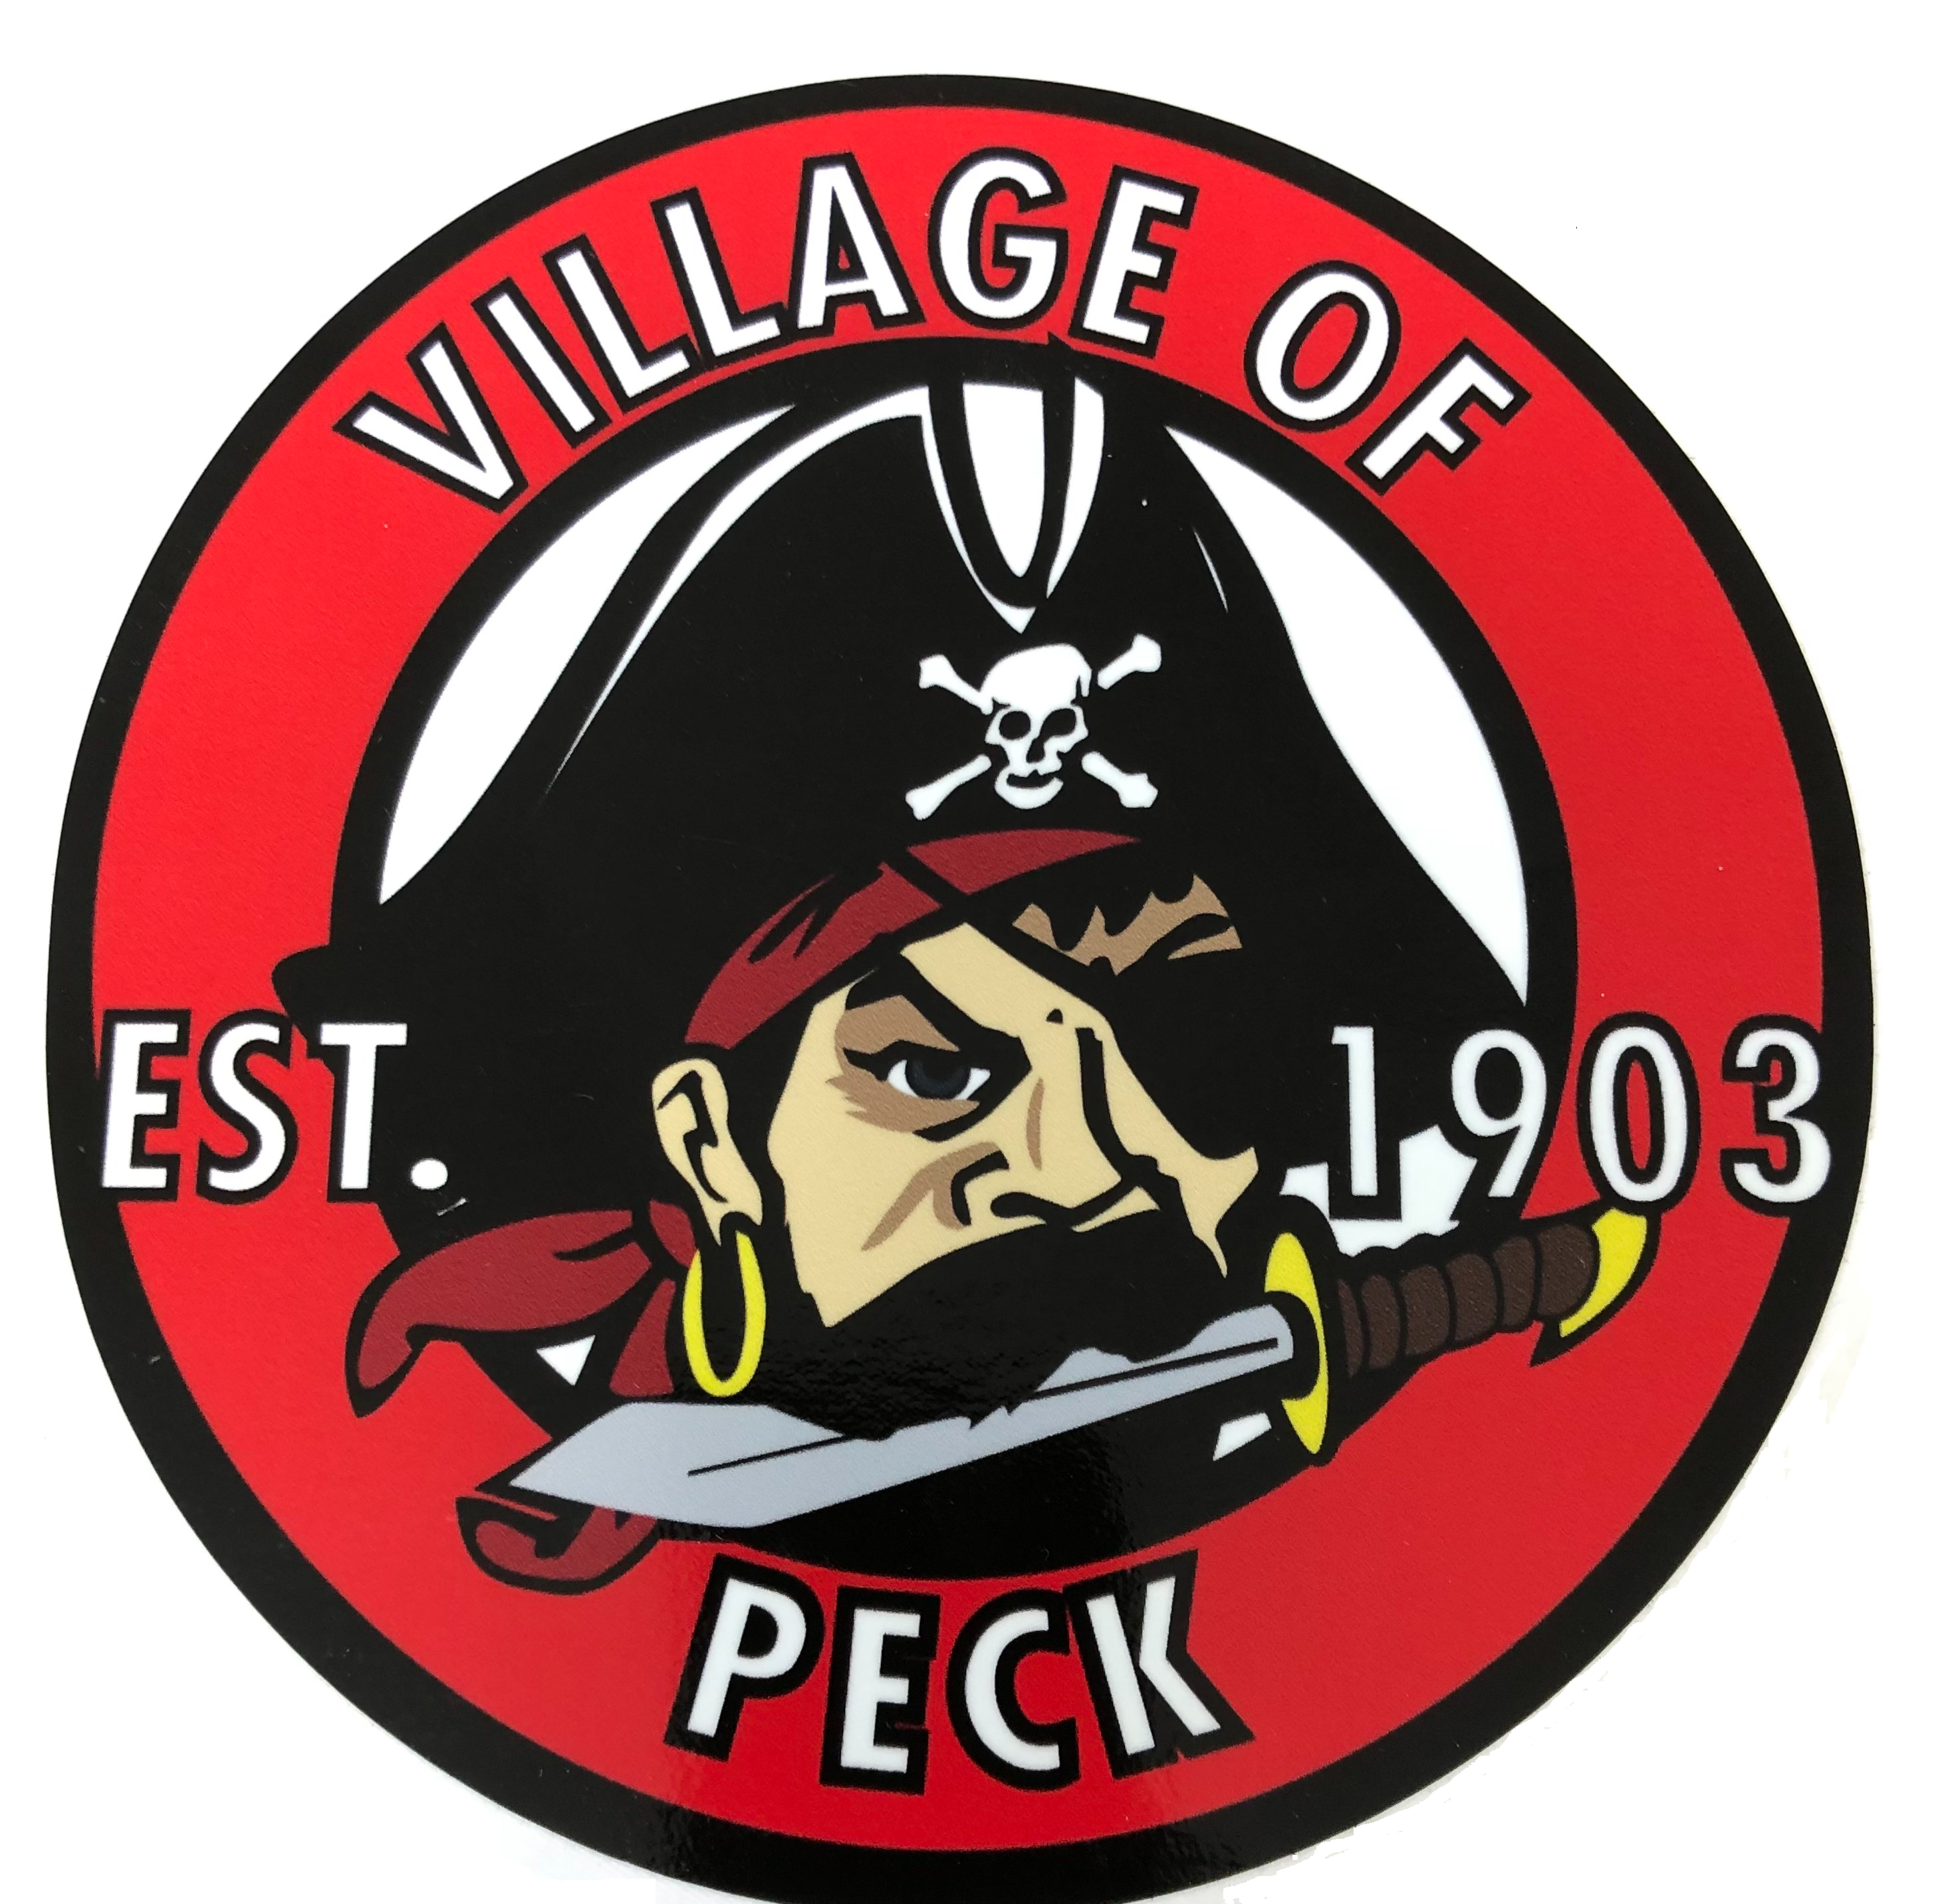 VILLAGE OF PECK, MI logo